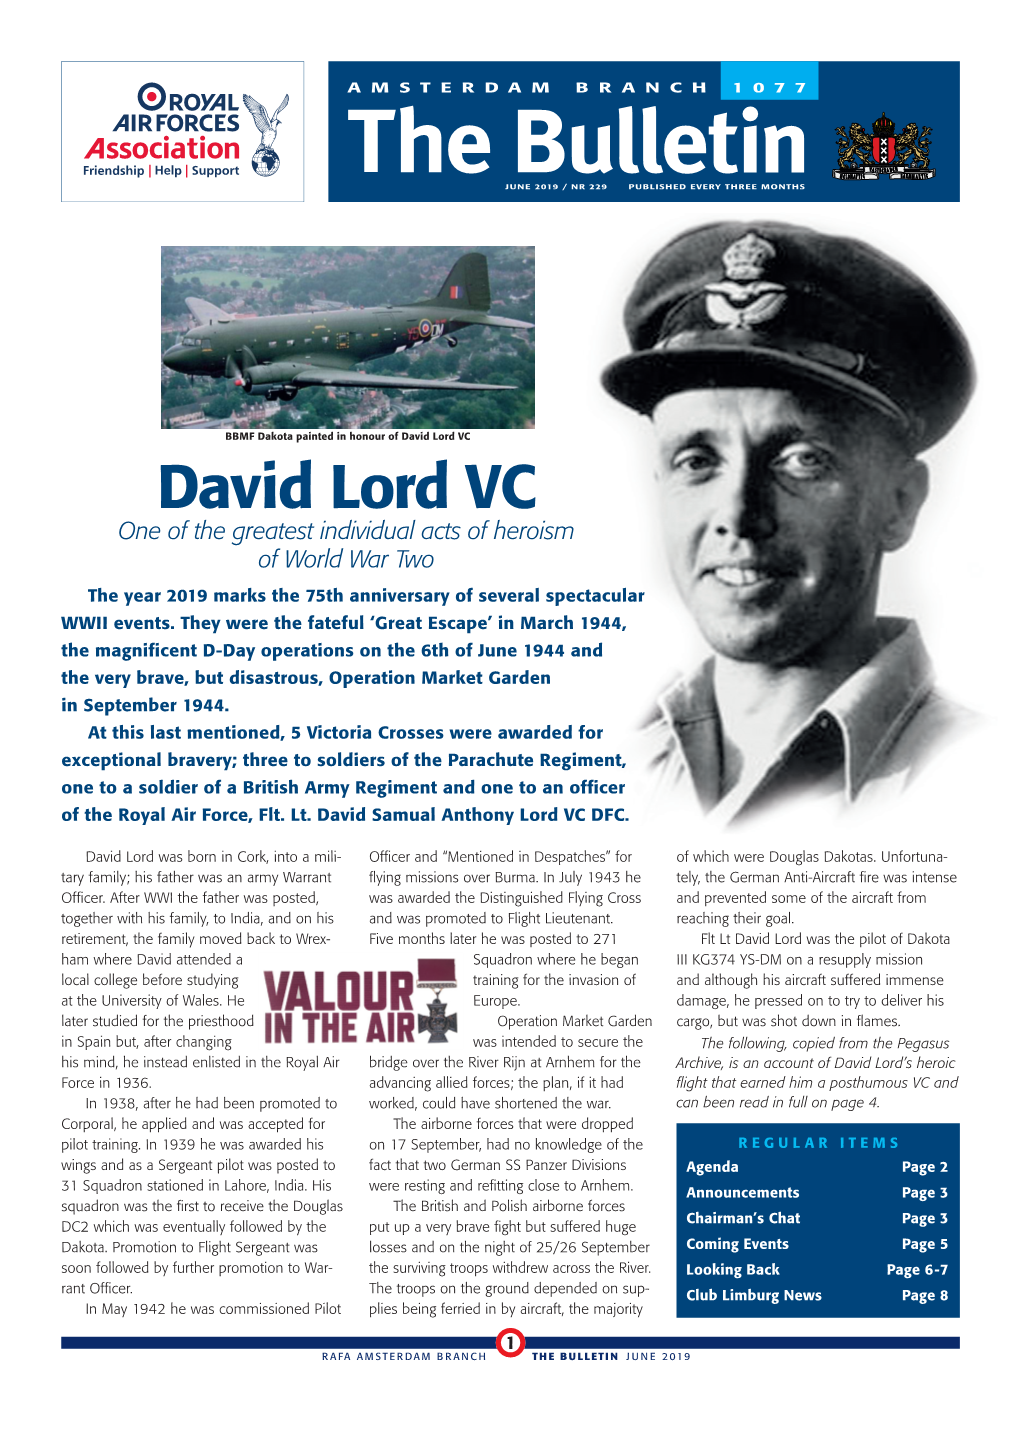 David Lord VC